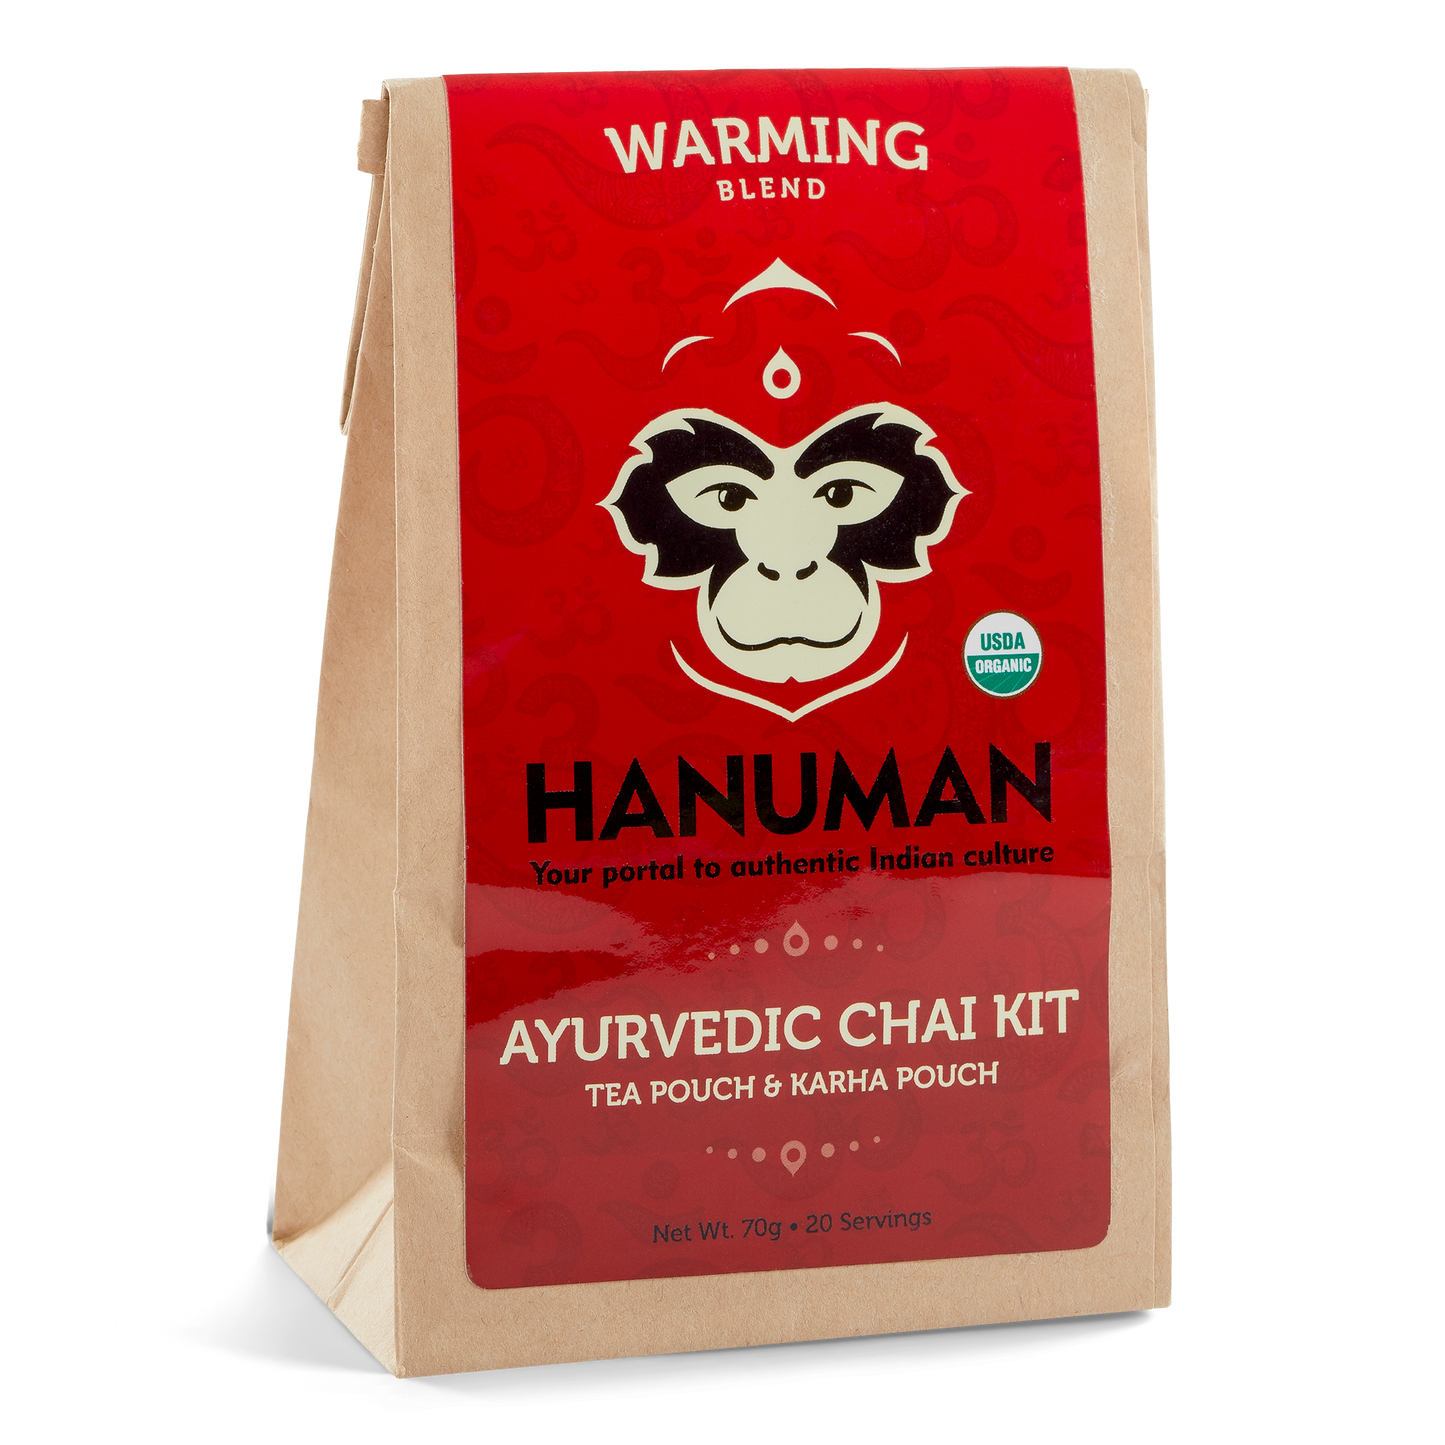 Ayurvedic & Organic Chai Kit: Warming (Loose Leaf Tea + Spices)